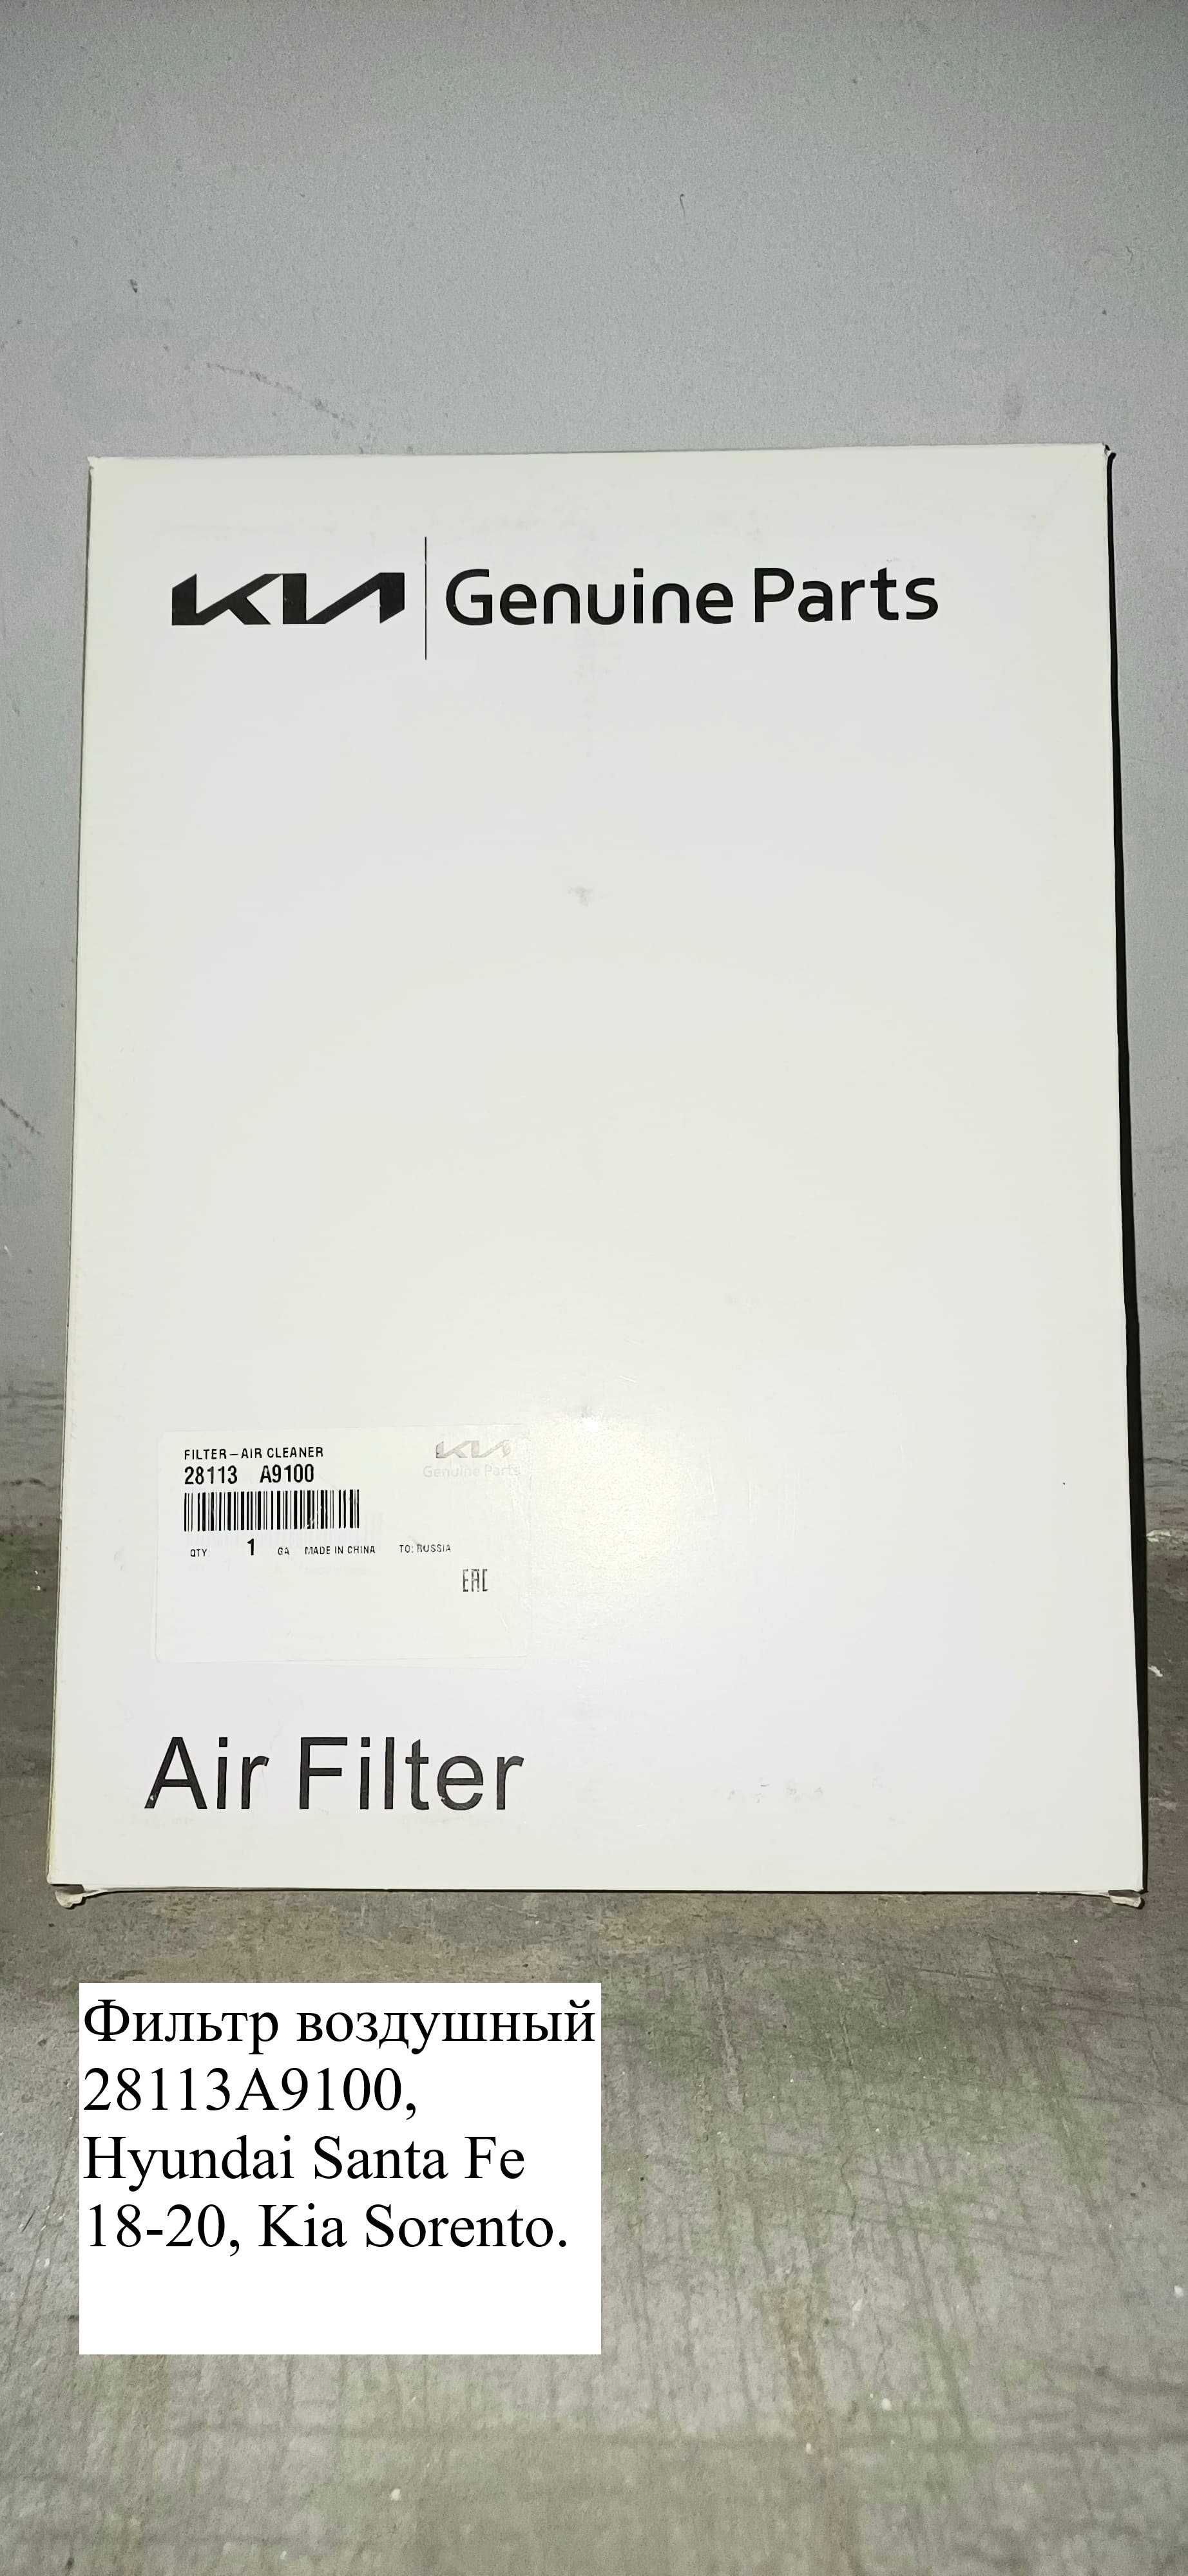 Фильтр воздушный 28113A9100, Hyundai Santa Fe 18-20, Kia Sorento.